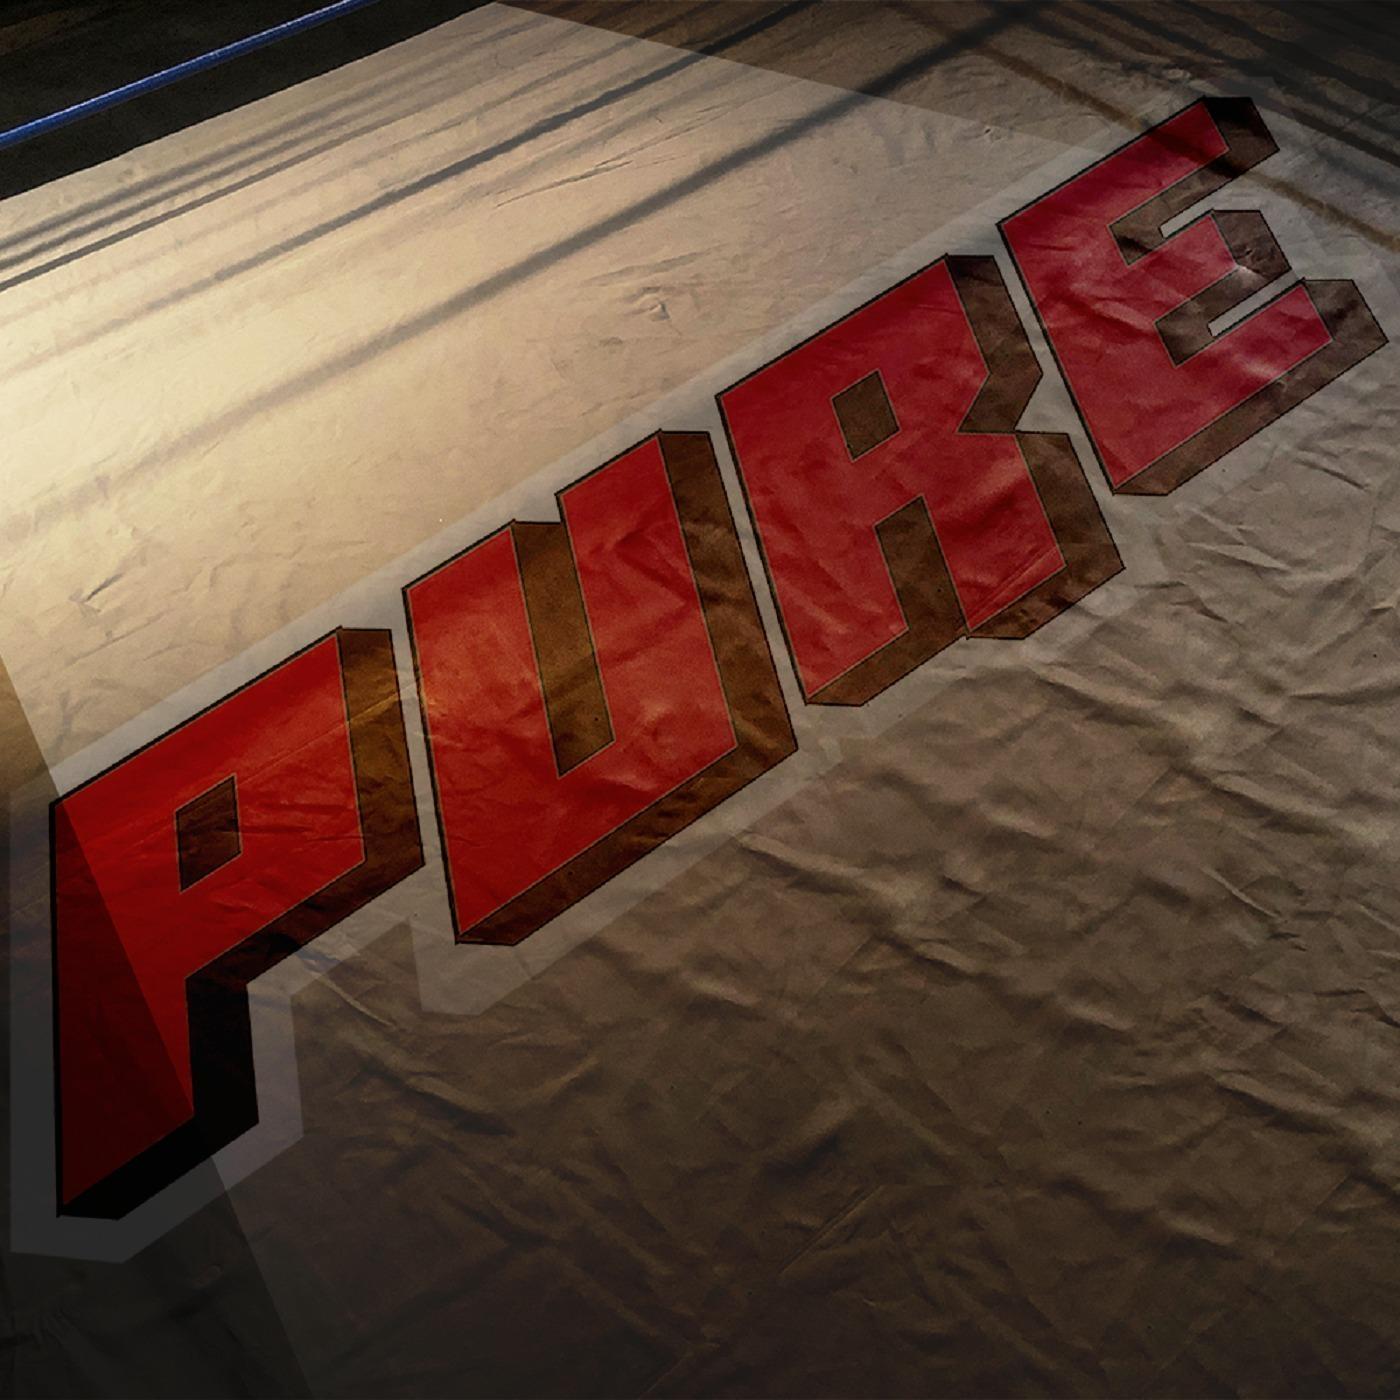 PURE - A ROH Retrospective Podcast